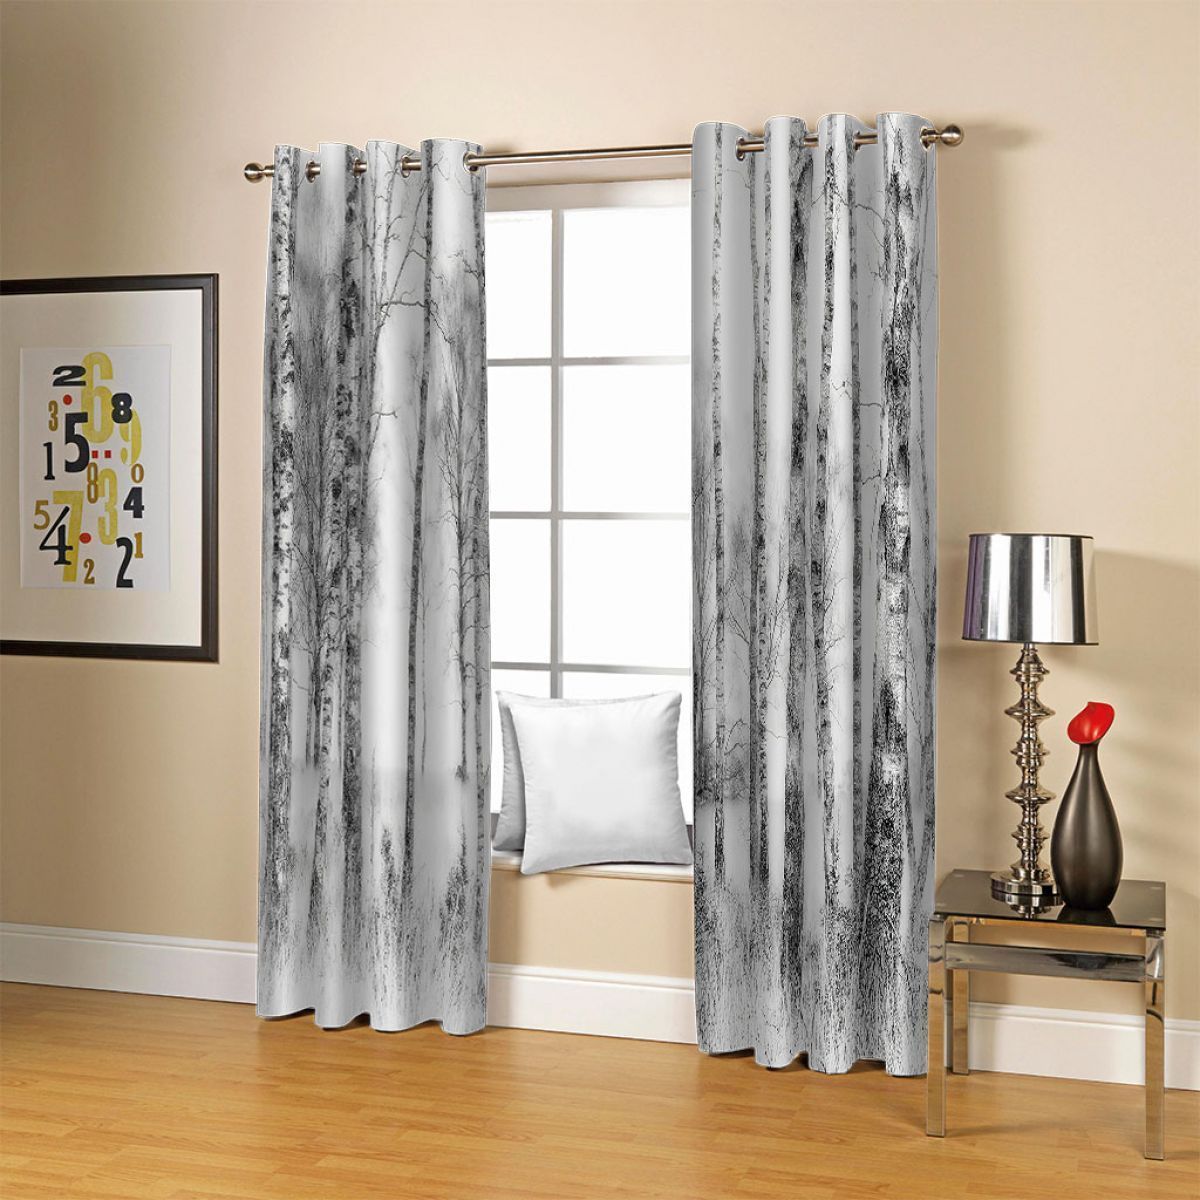 gray trees printed window curtain home decor 1812